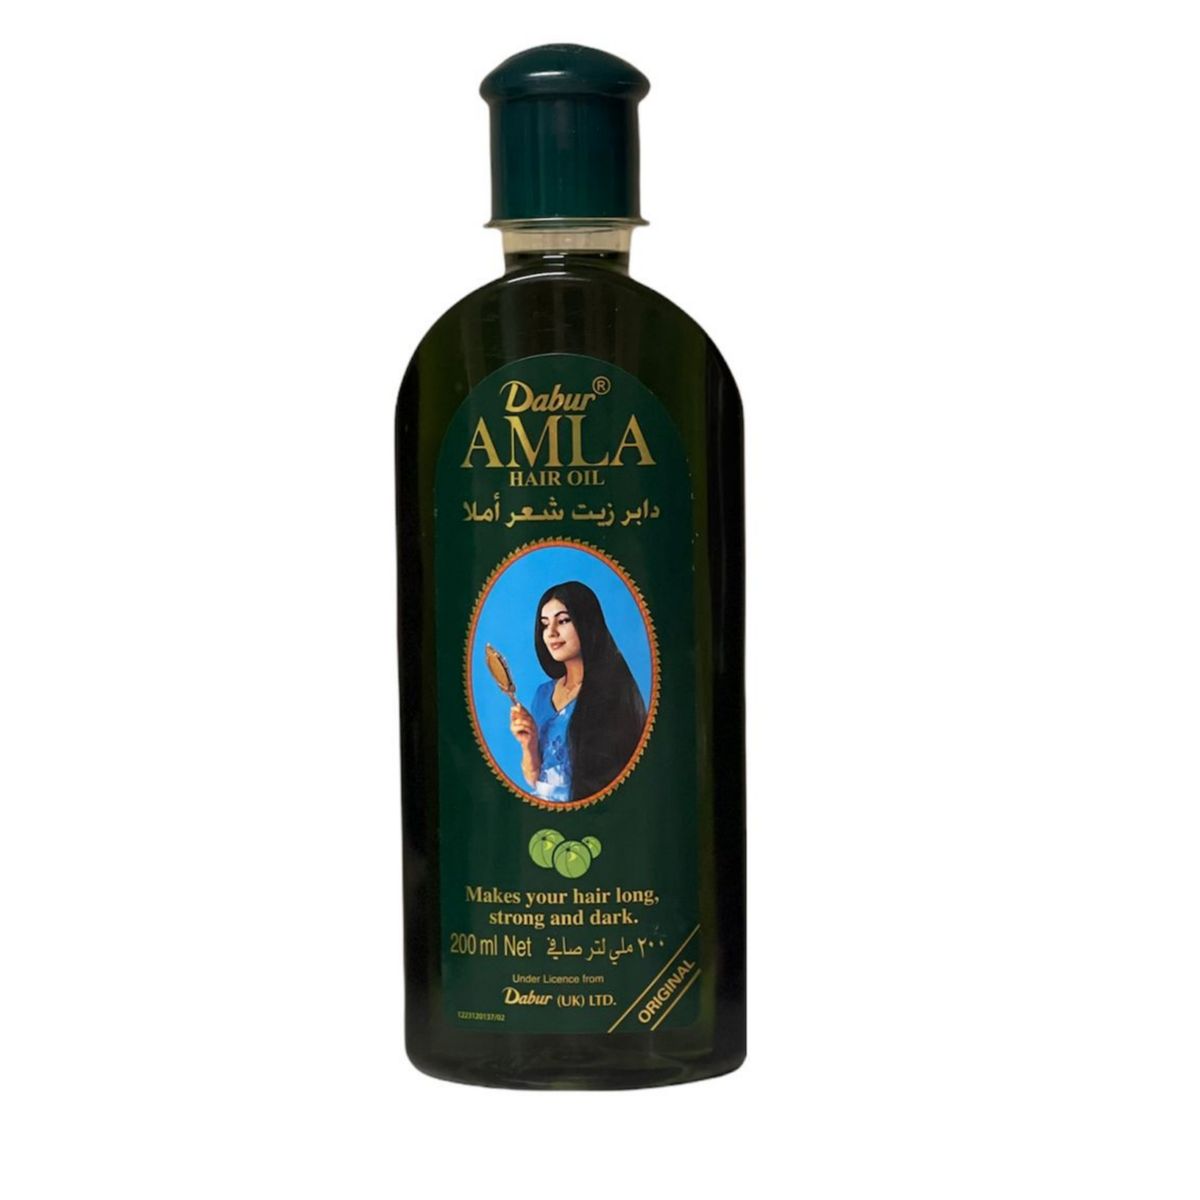 Amla Hair Oil For Maxi Hair Growth - 200 ml | Buy Online in South Africa |  